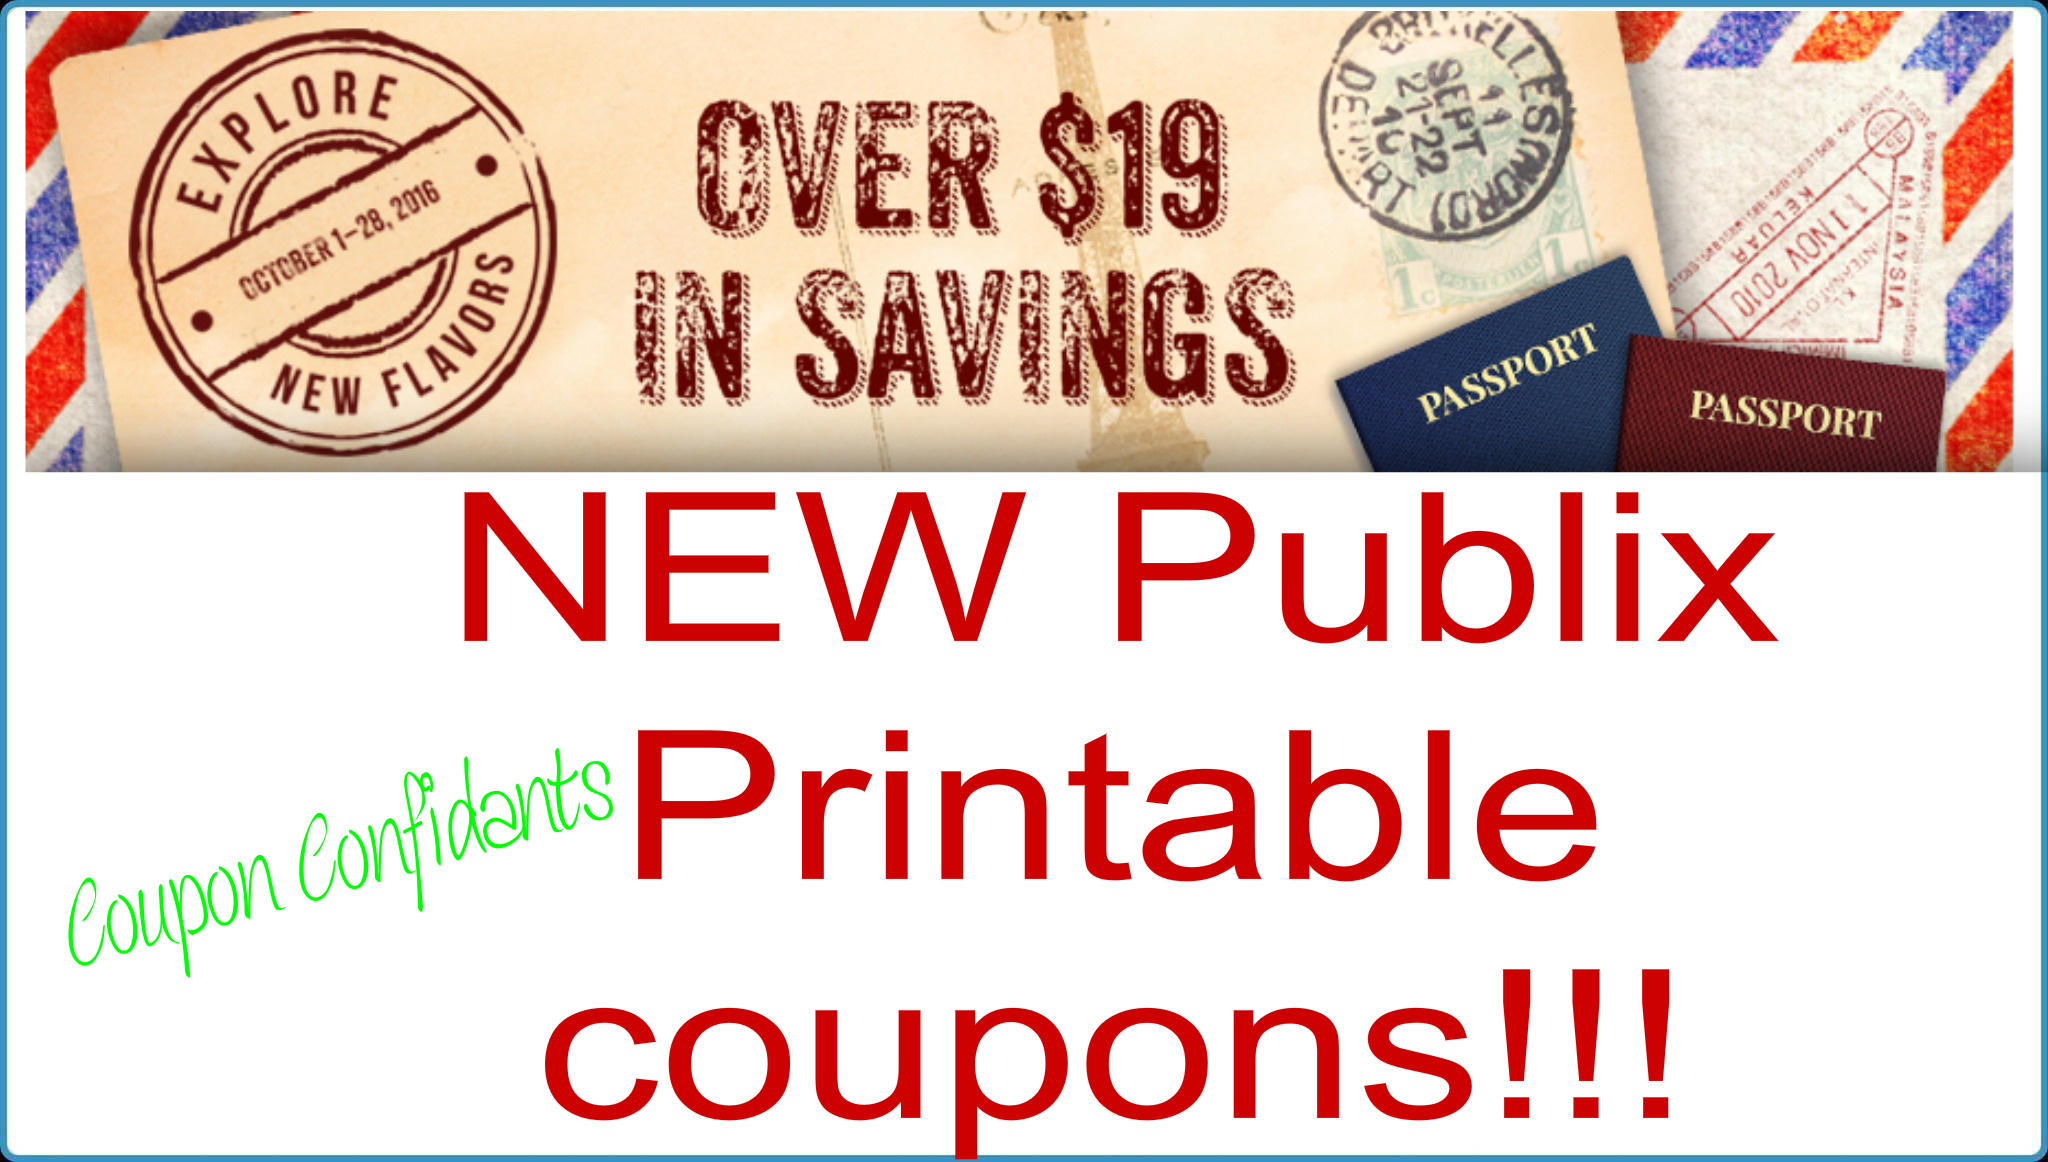 New PUBLIX coupon book Explore the Flavors is now printable!! Click